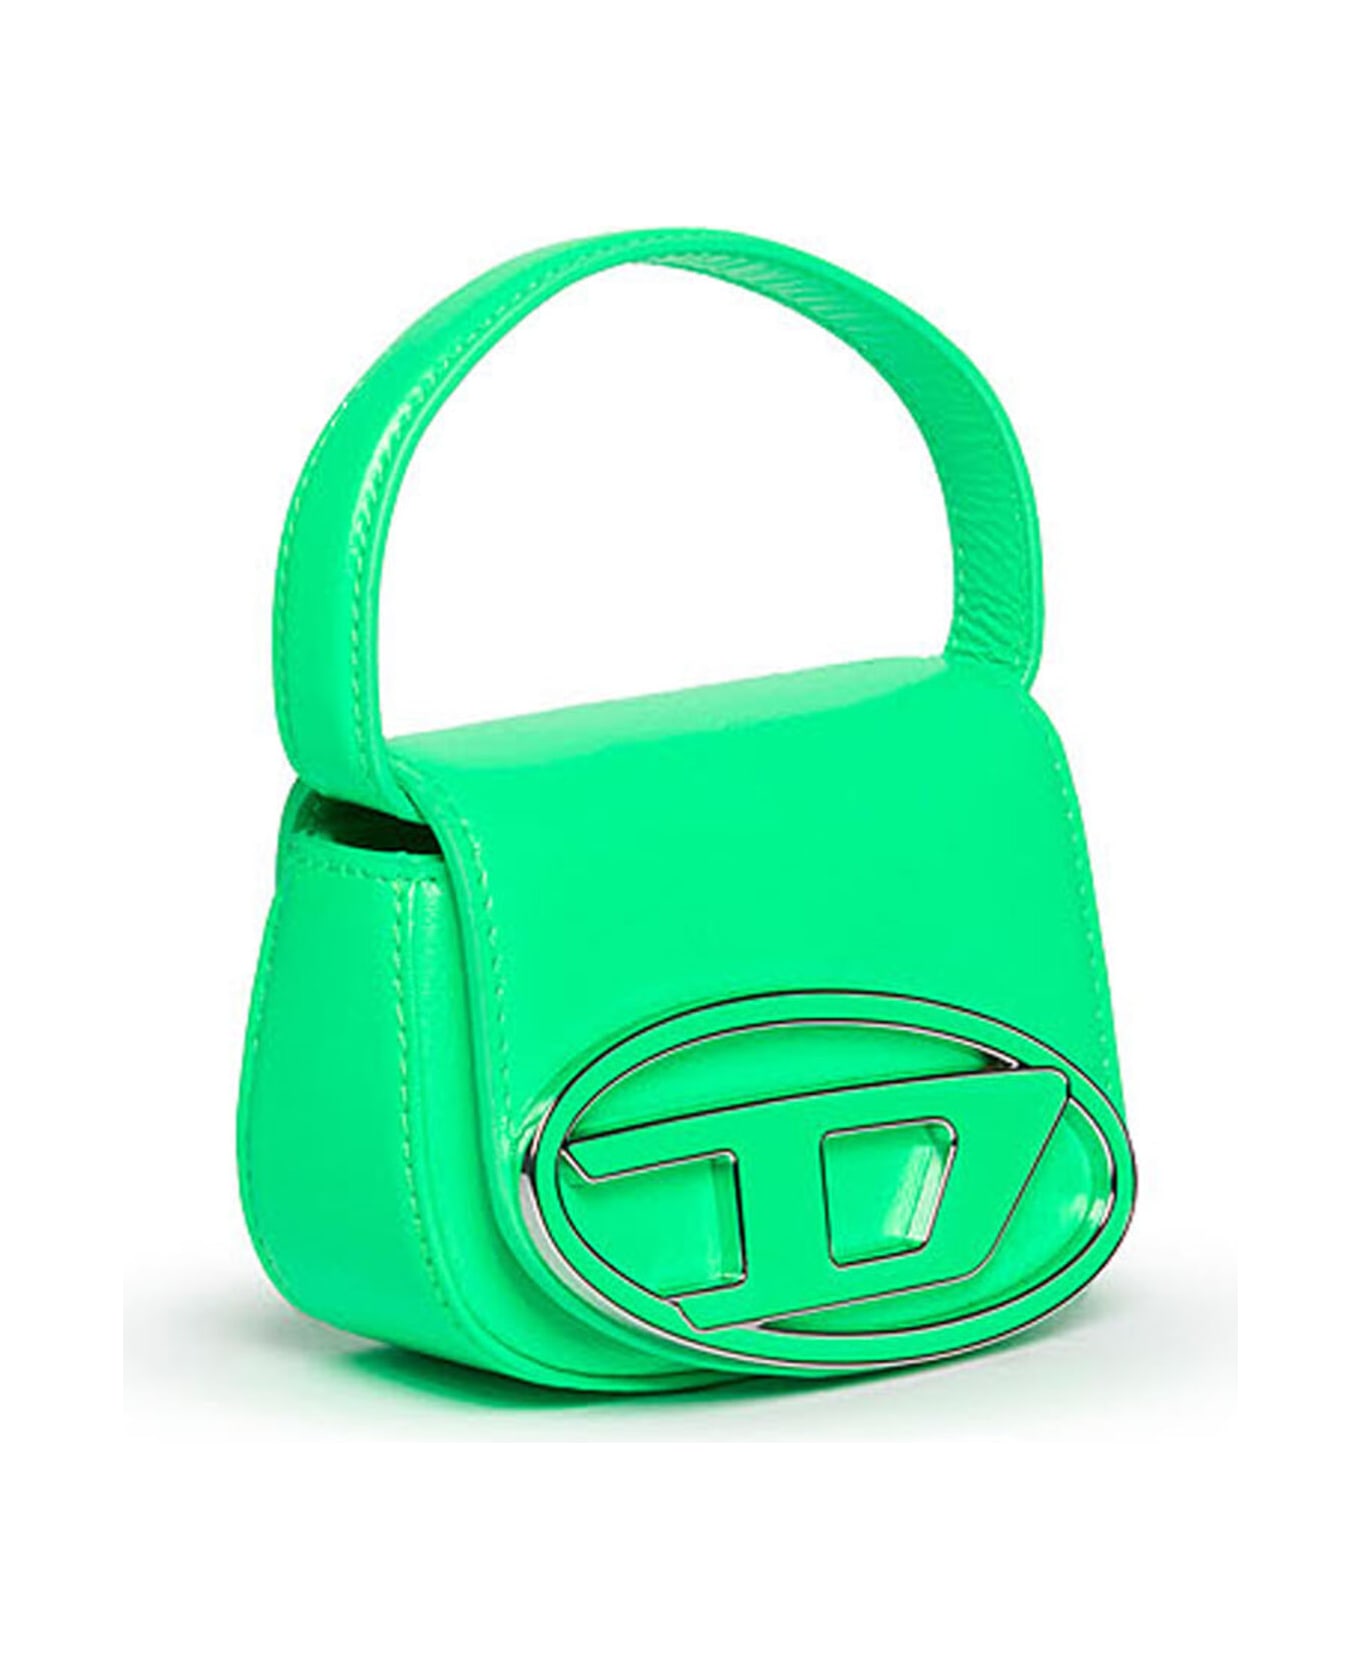 Diesel 1dr Xs Bags Diesel 1dr Xs Bag In Fluo Imitation Leather - Verde